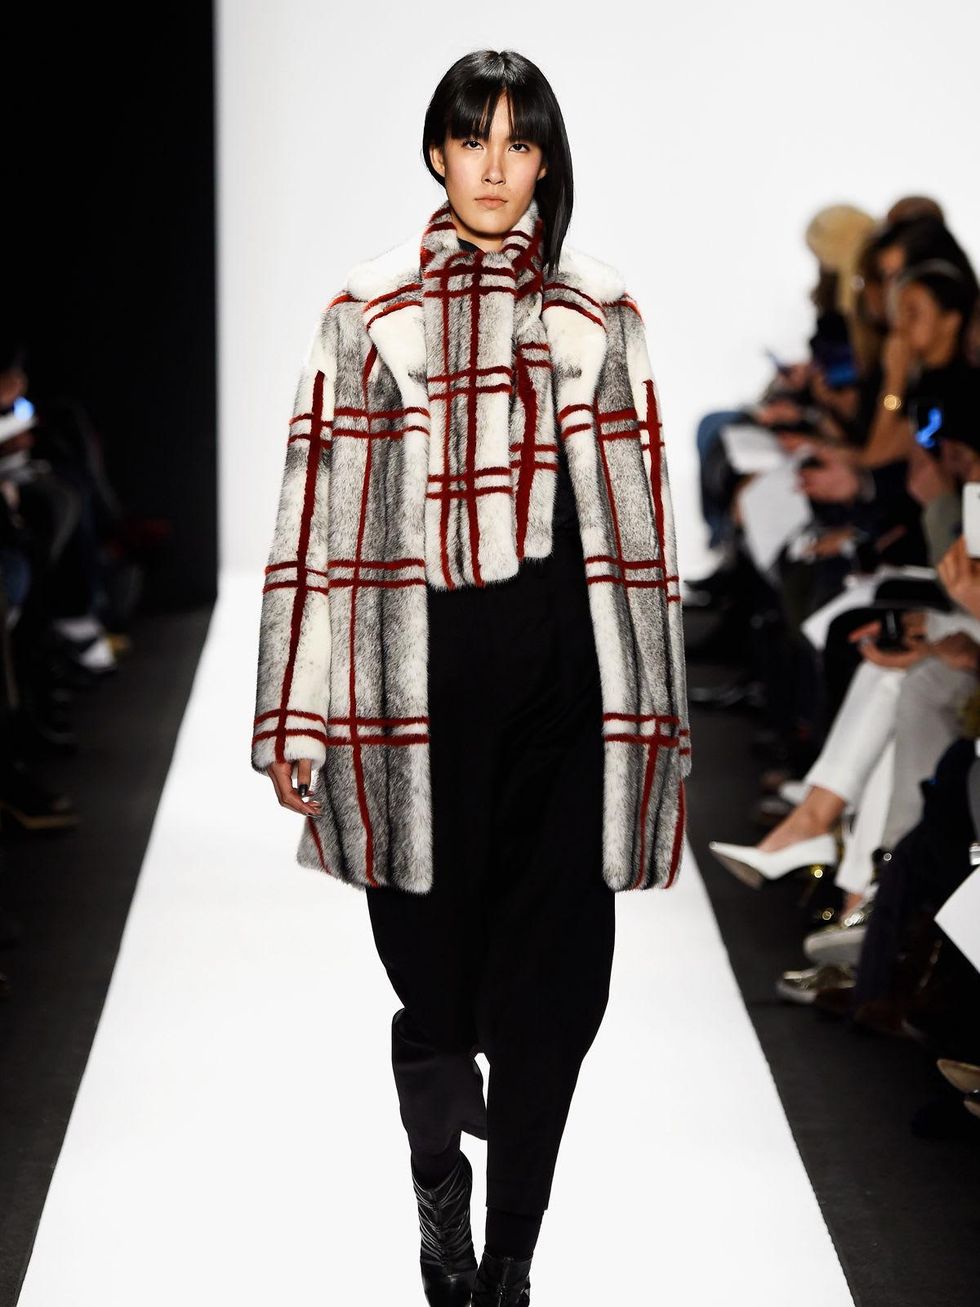 463506170 Clifford New York Fashion Week Fall 2015 February 2015 Carmen Marc Valvo